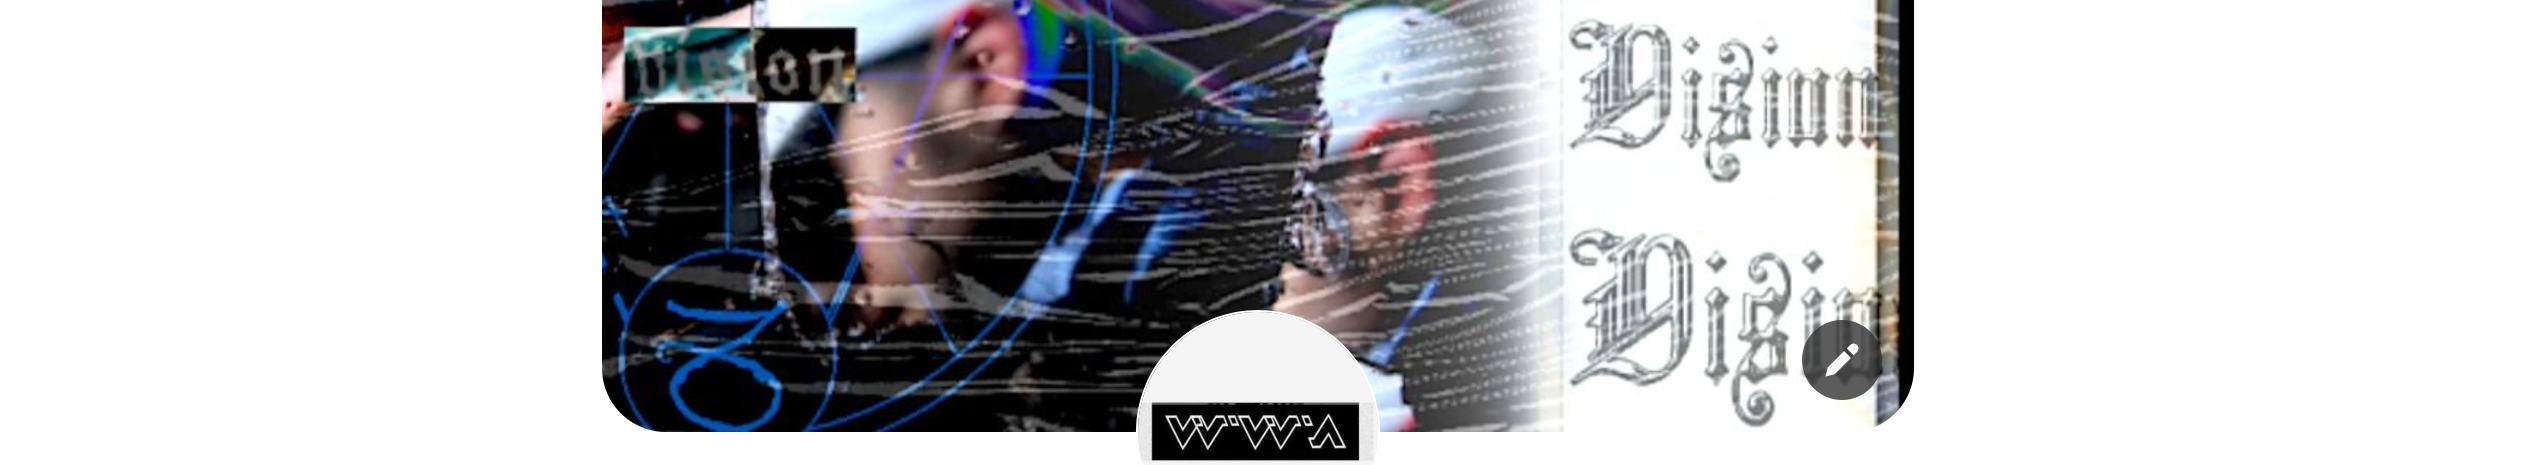 WWA whitewolfarts profilbanner